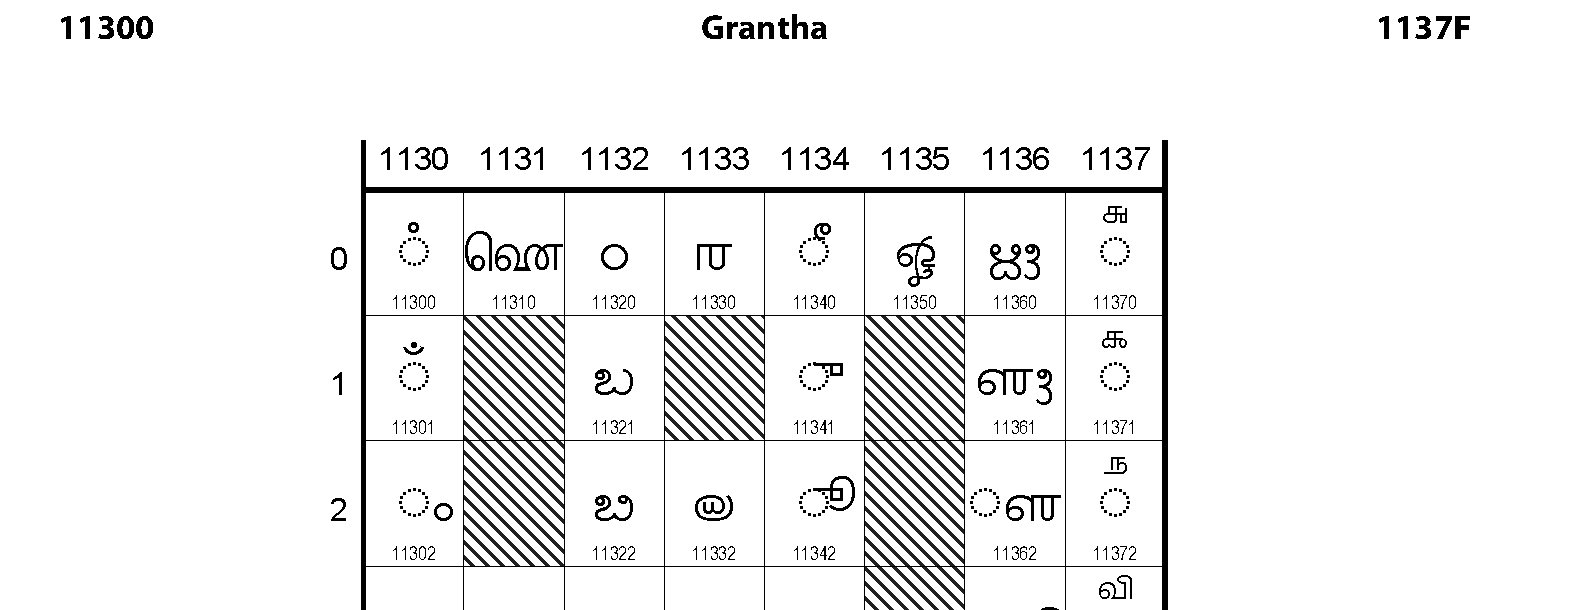 Unicode - Grantha